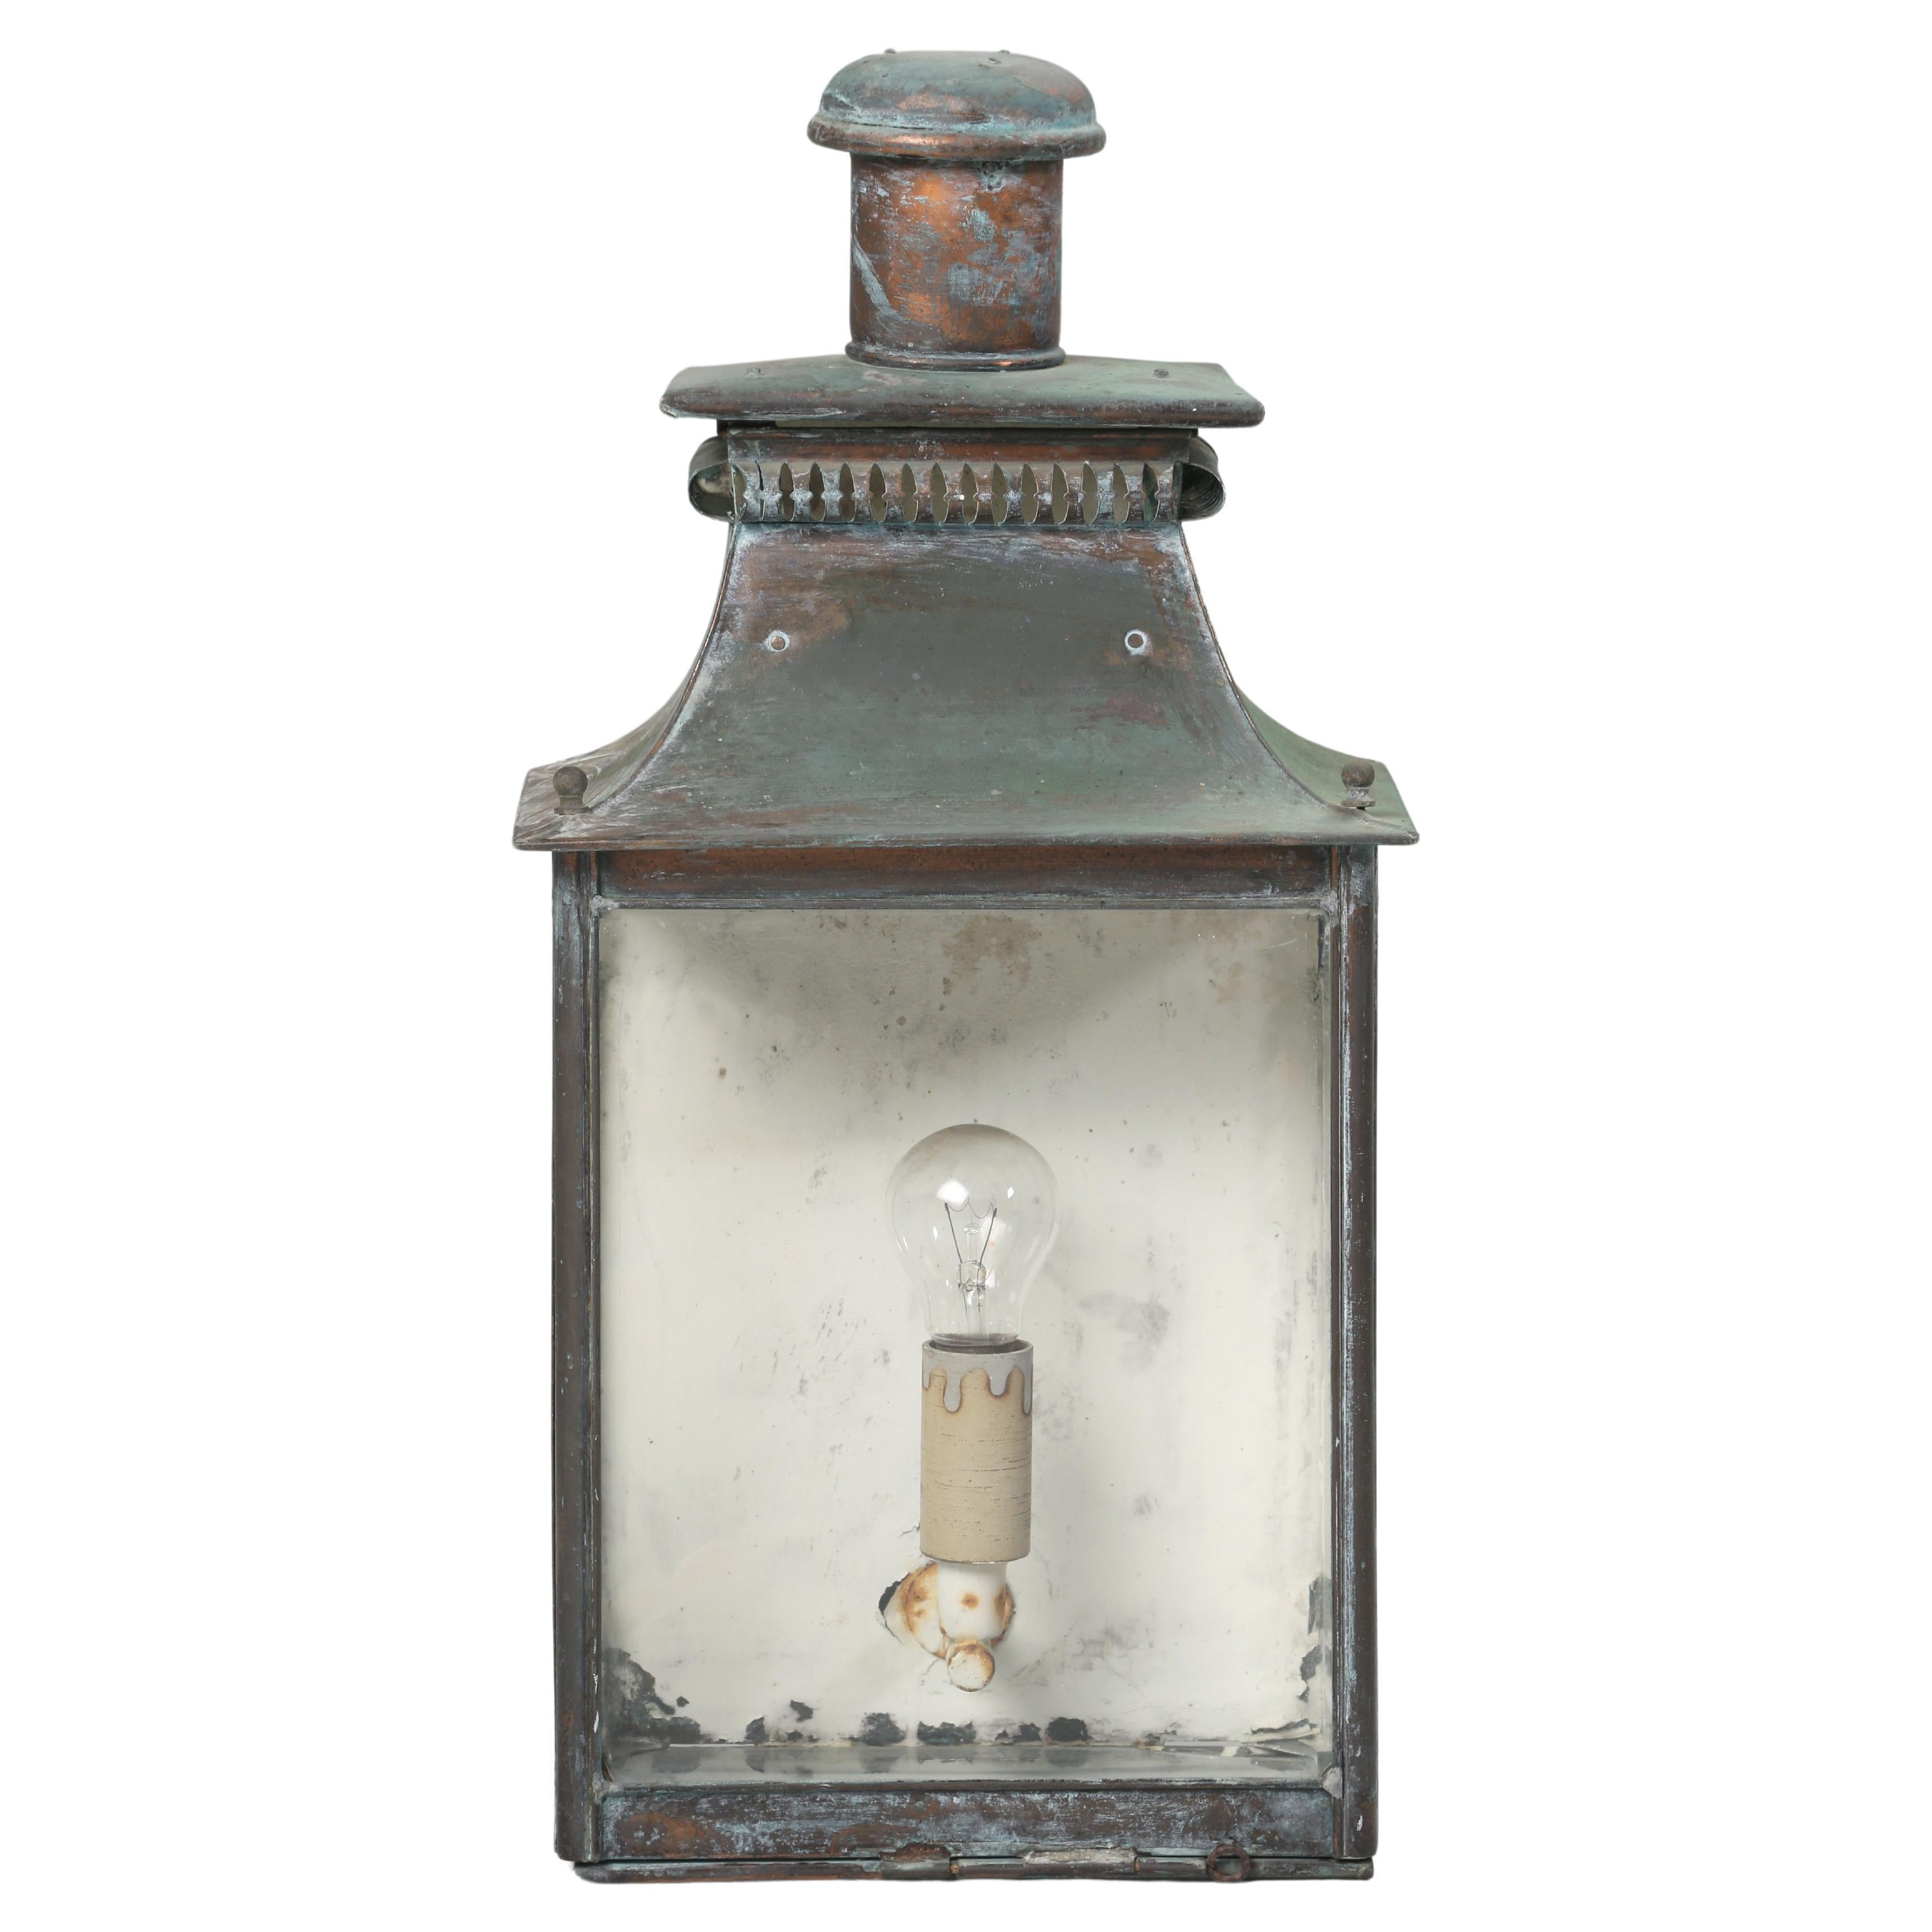 Antique French Copper Lantern Original Unrestored Condition Beautiful Patina 